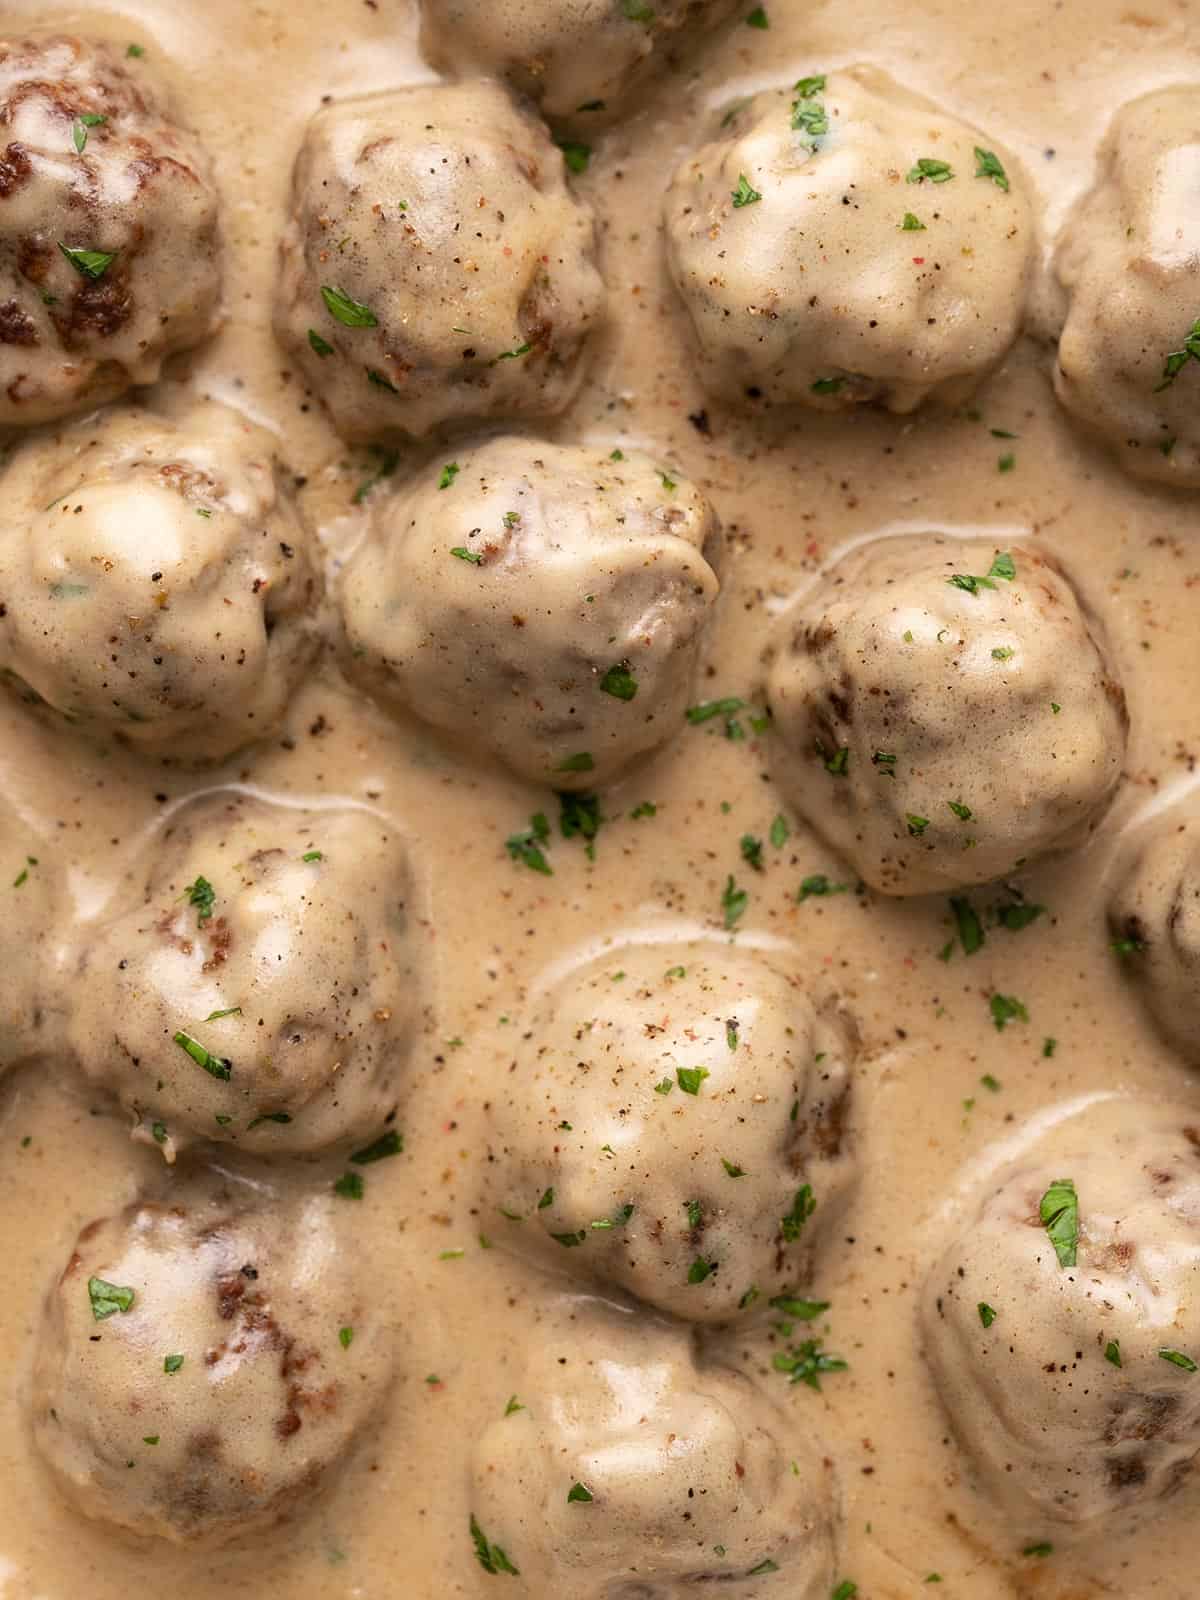 Super close up image of Swedish meatballs in gravy. 